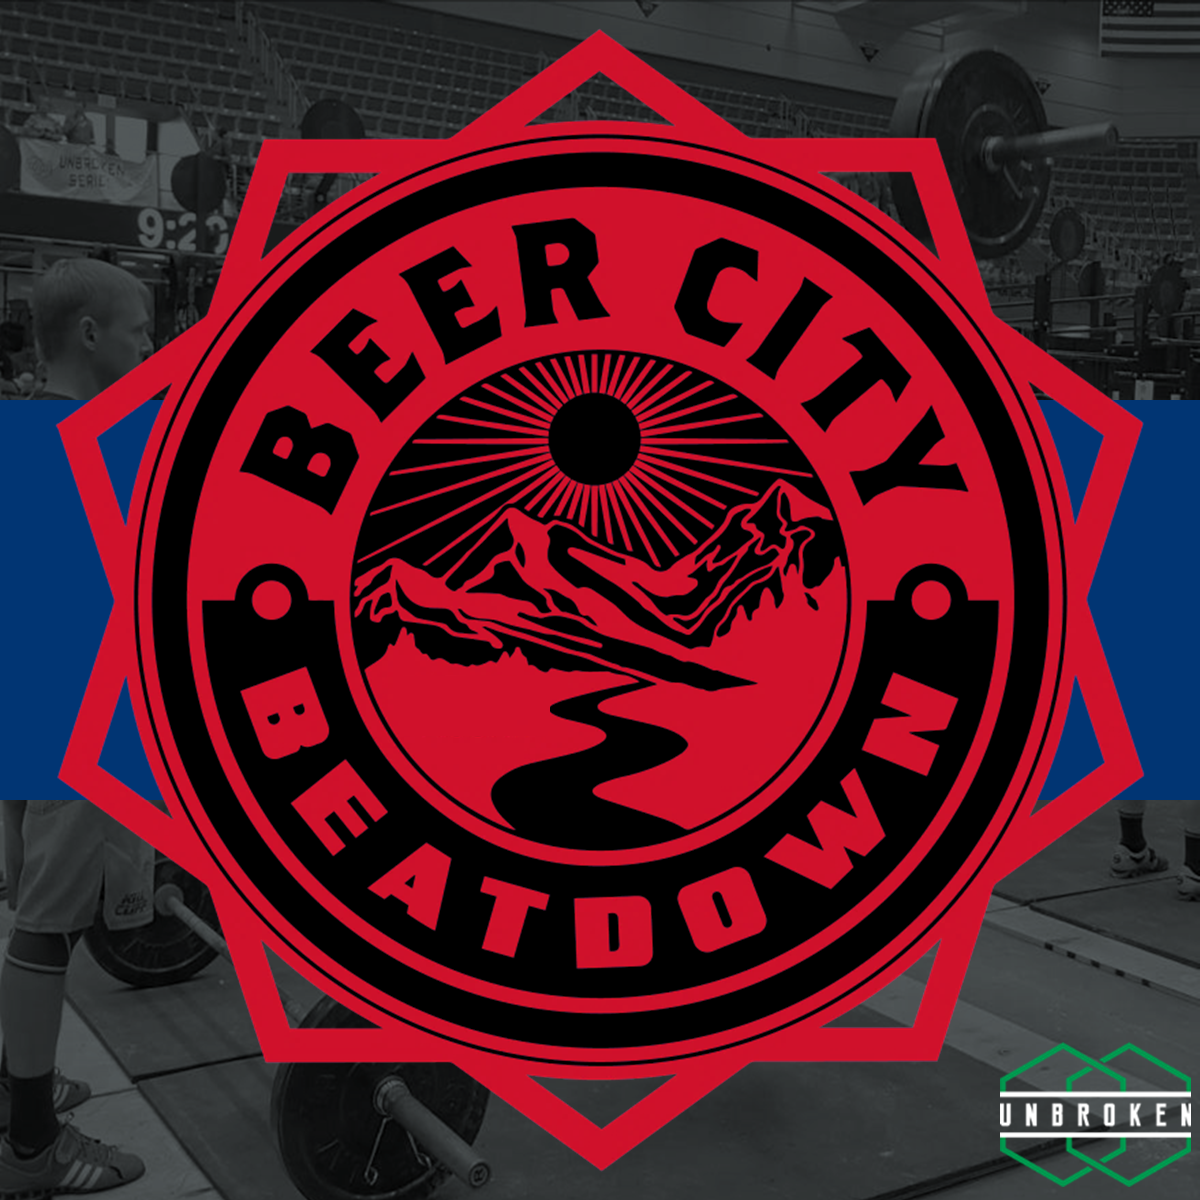 Beer City Beatdown new event image